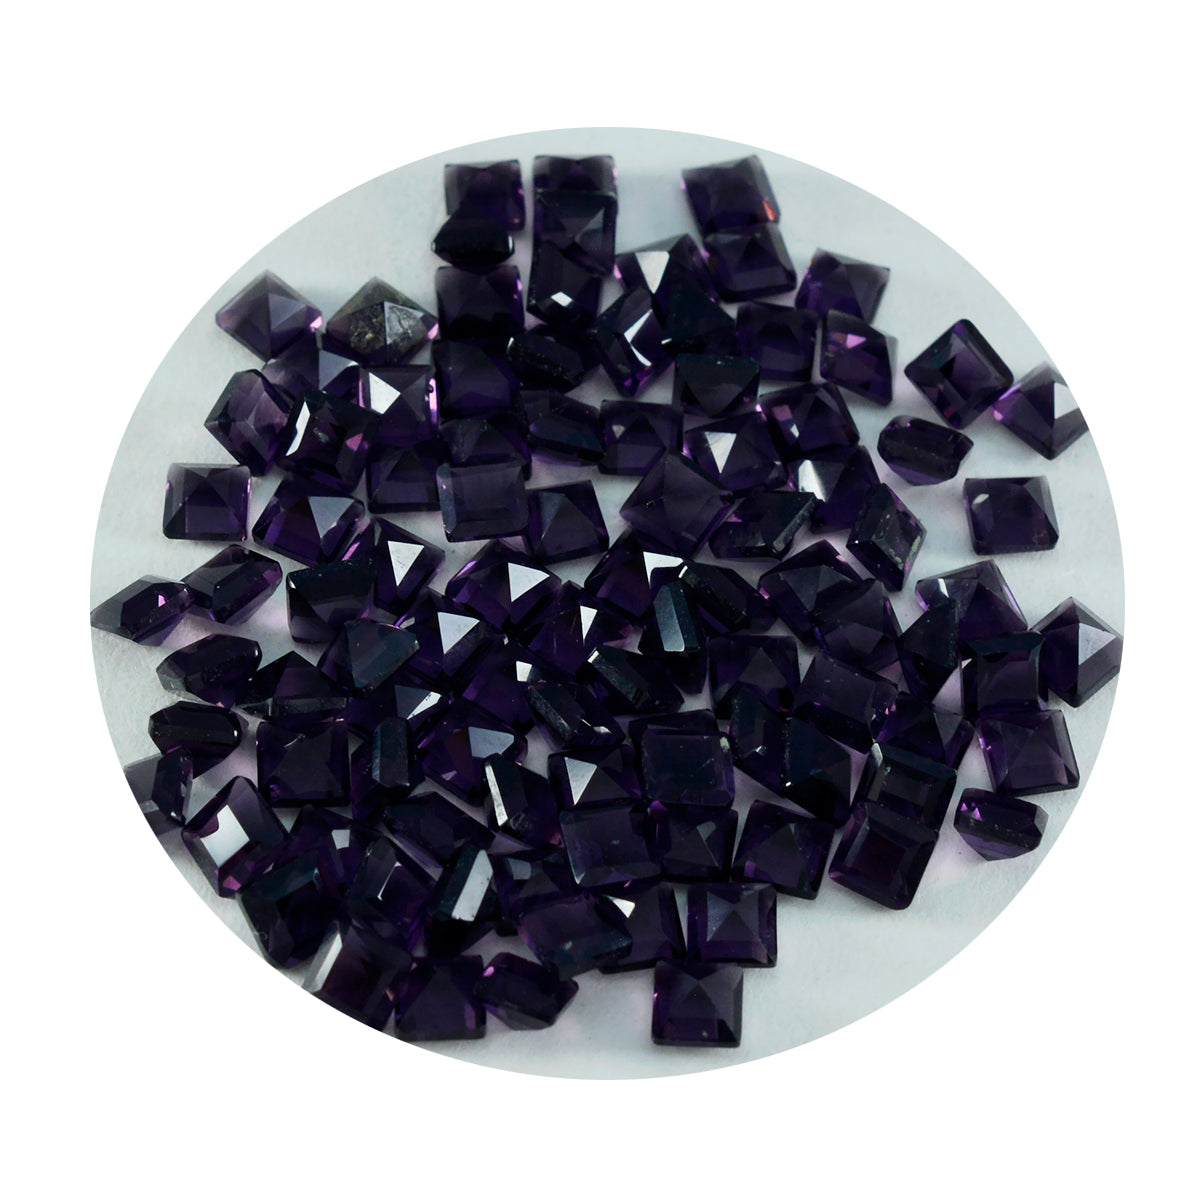 Riyogems 1PC Purple Amethyst CZ Faceted 4x4 mm Square Shape startling Quality Loose Gemstone